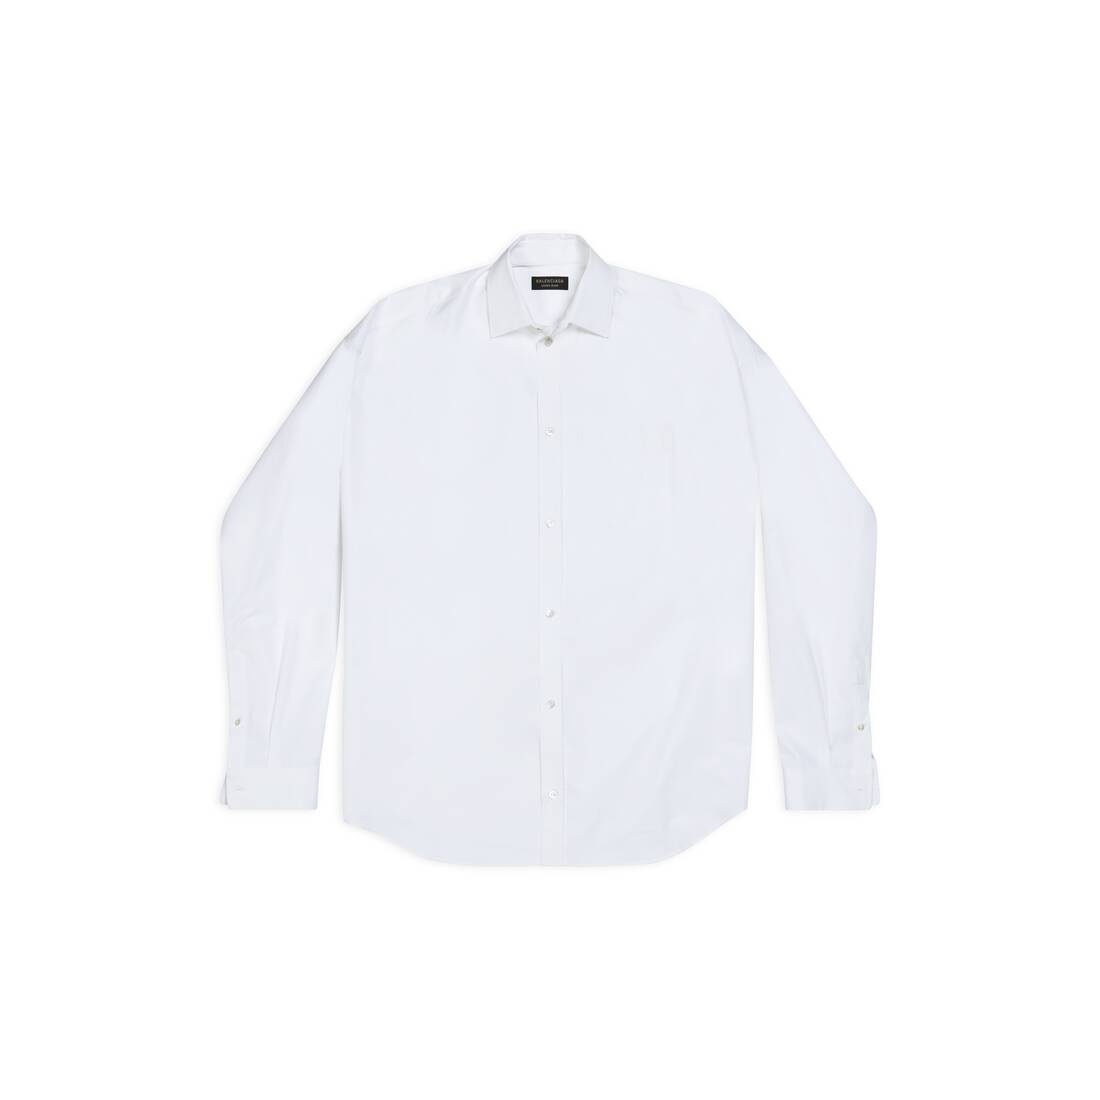 Men's Cocoon Shirt in White - 1